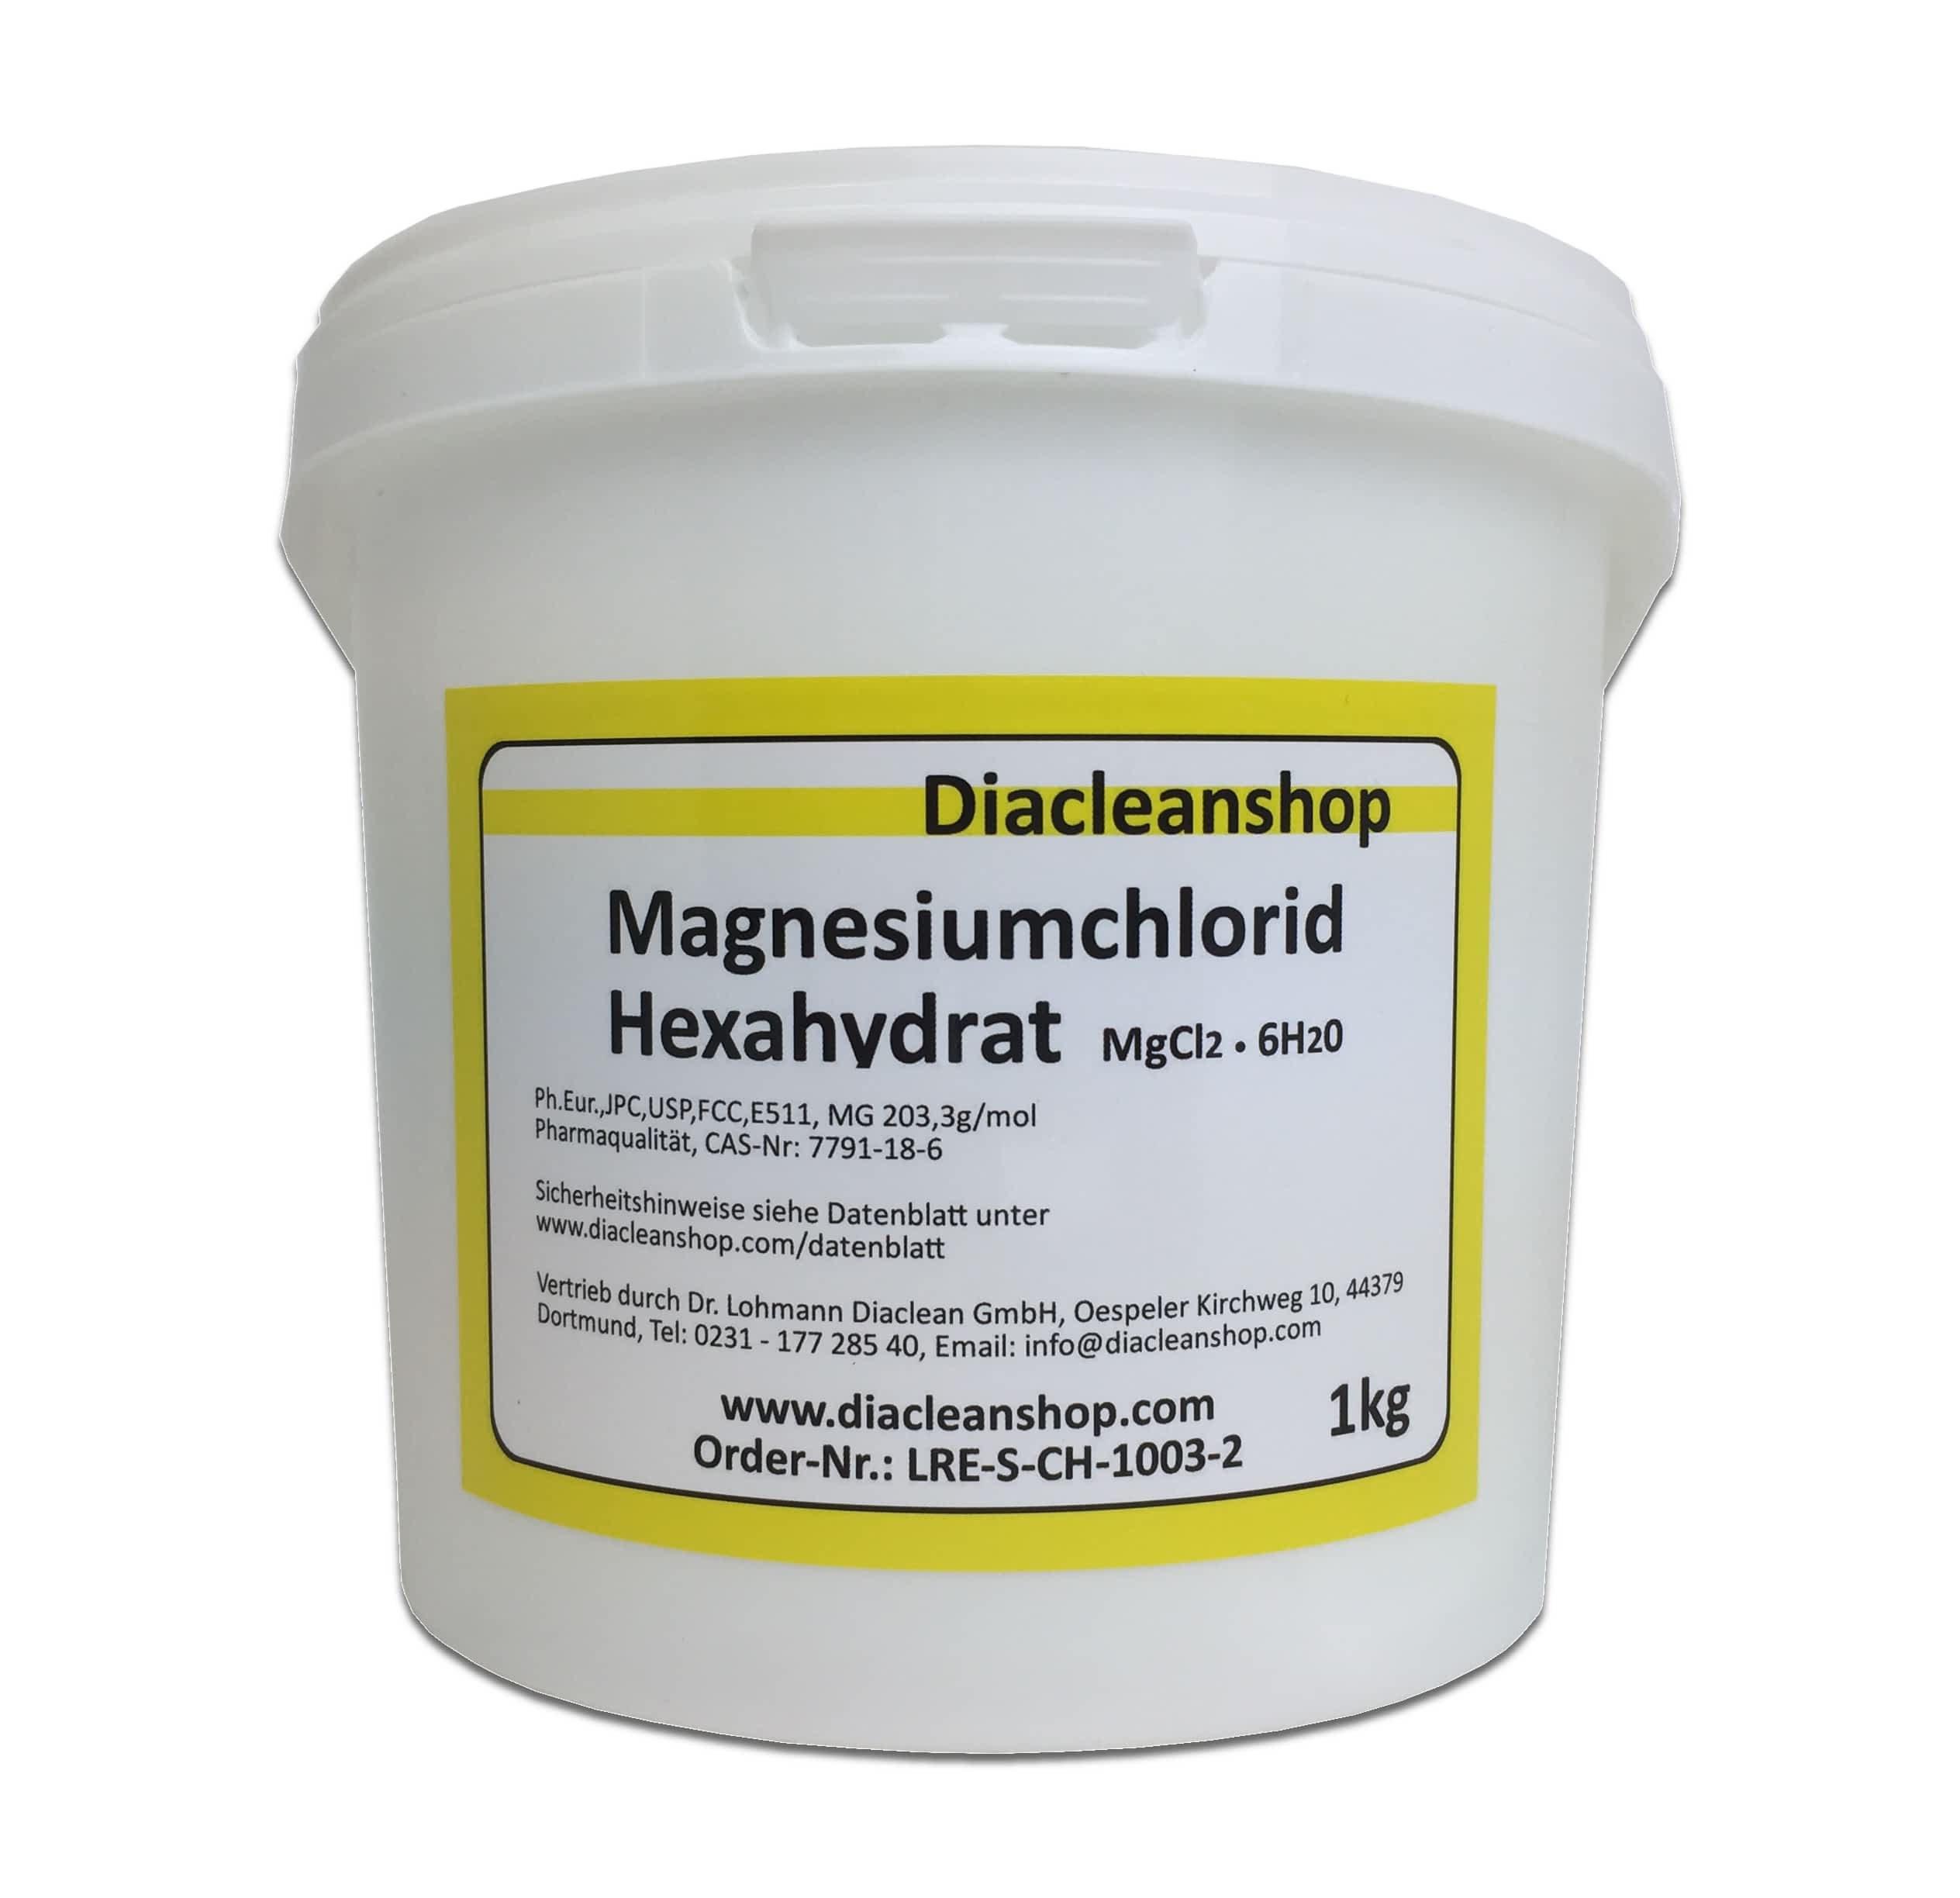 Magnesiumchlorid Hexahydrat - Pharma E511 1kg